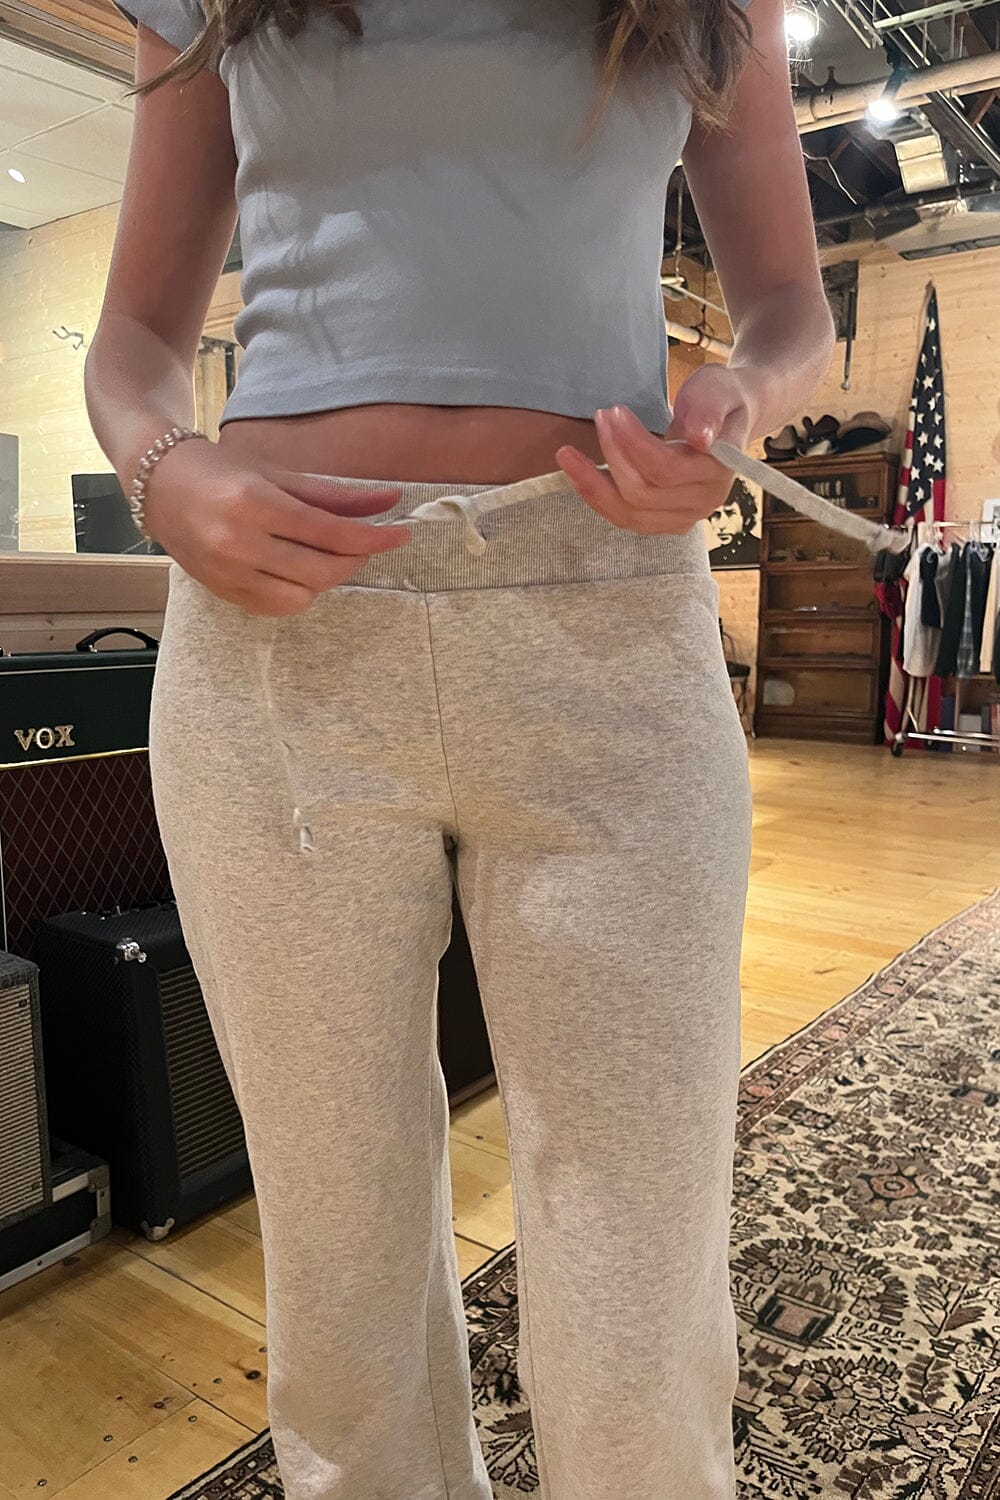 Yoga Pants